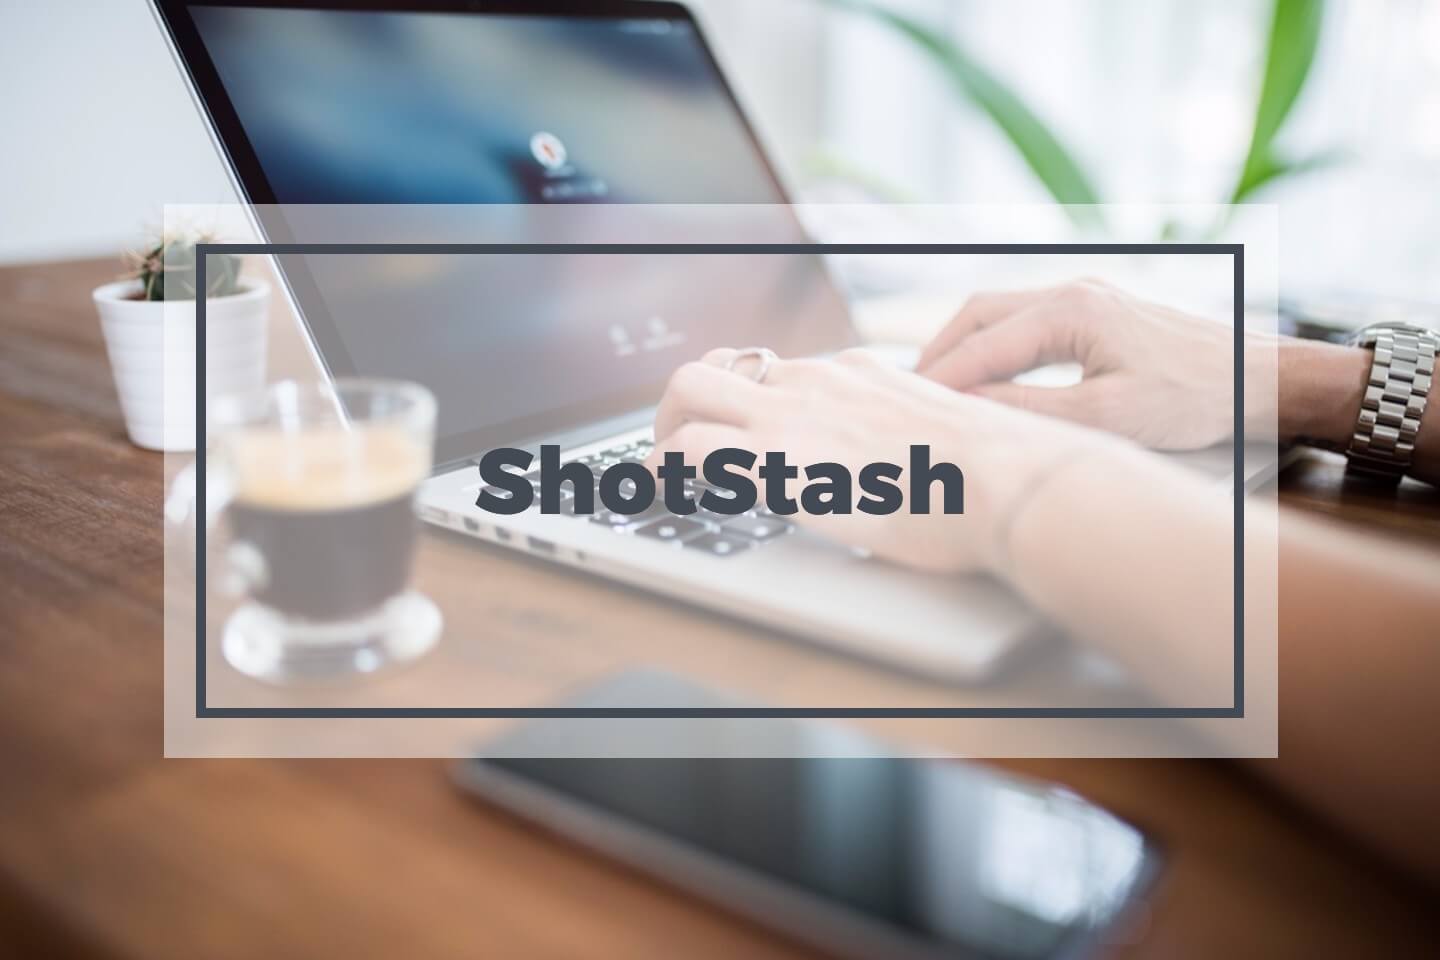 ShotStash